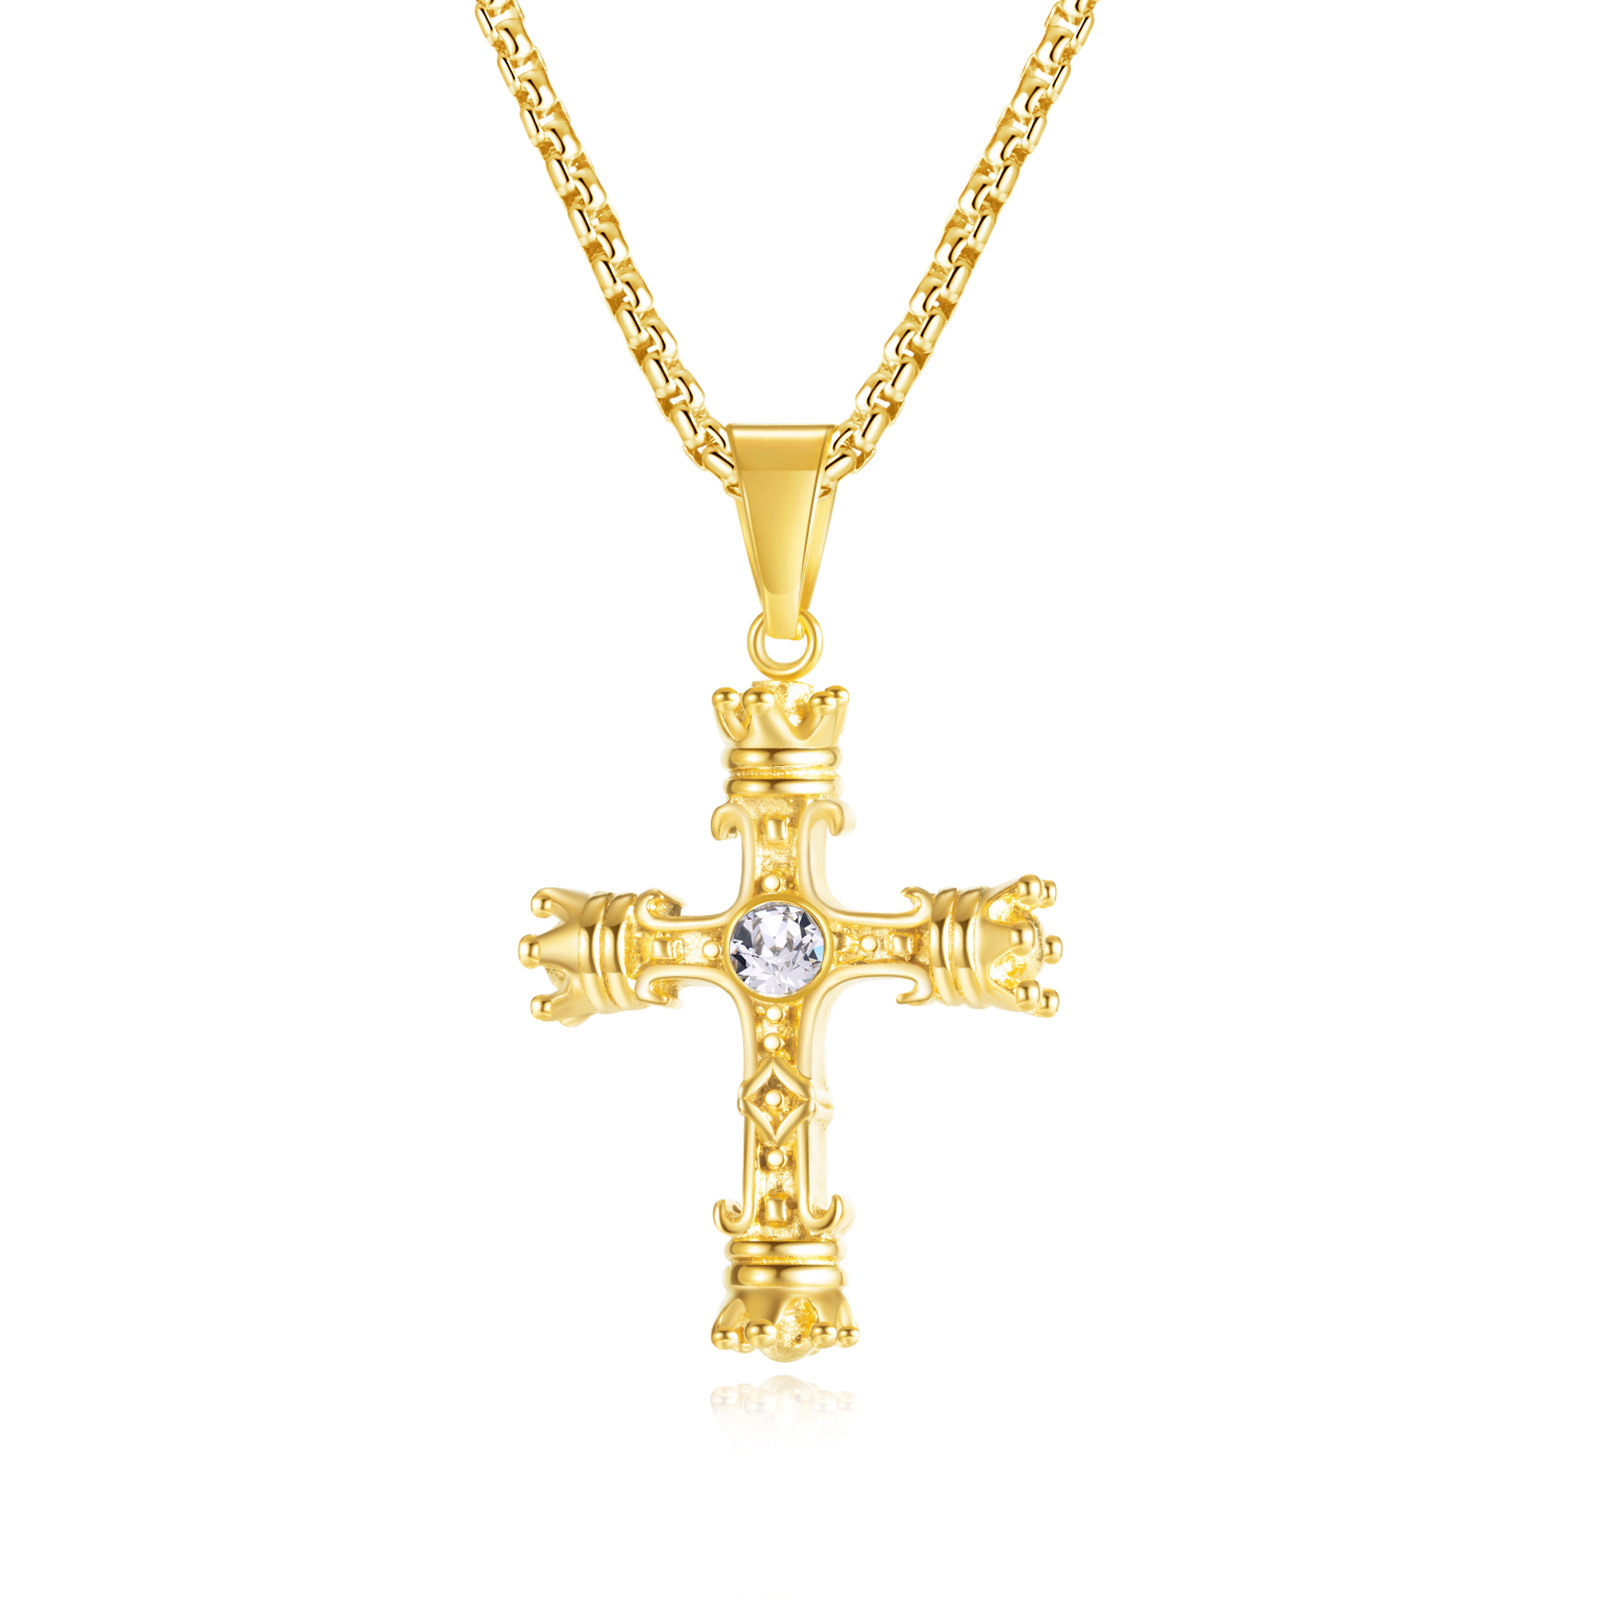 6:Golden pendant matching chain (formula pearl chain 3*55cm)